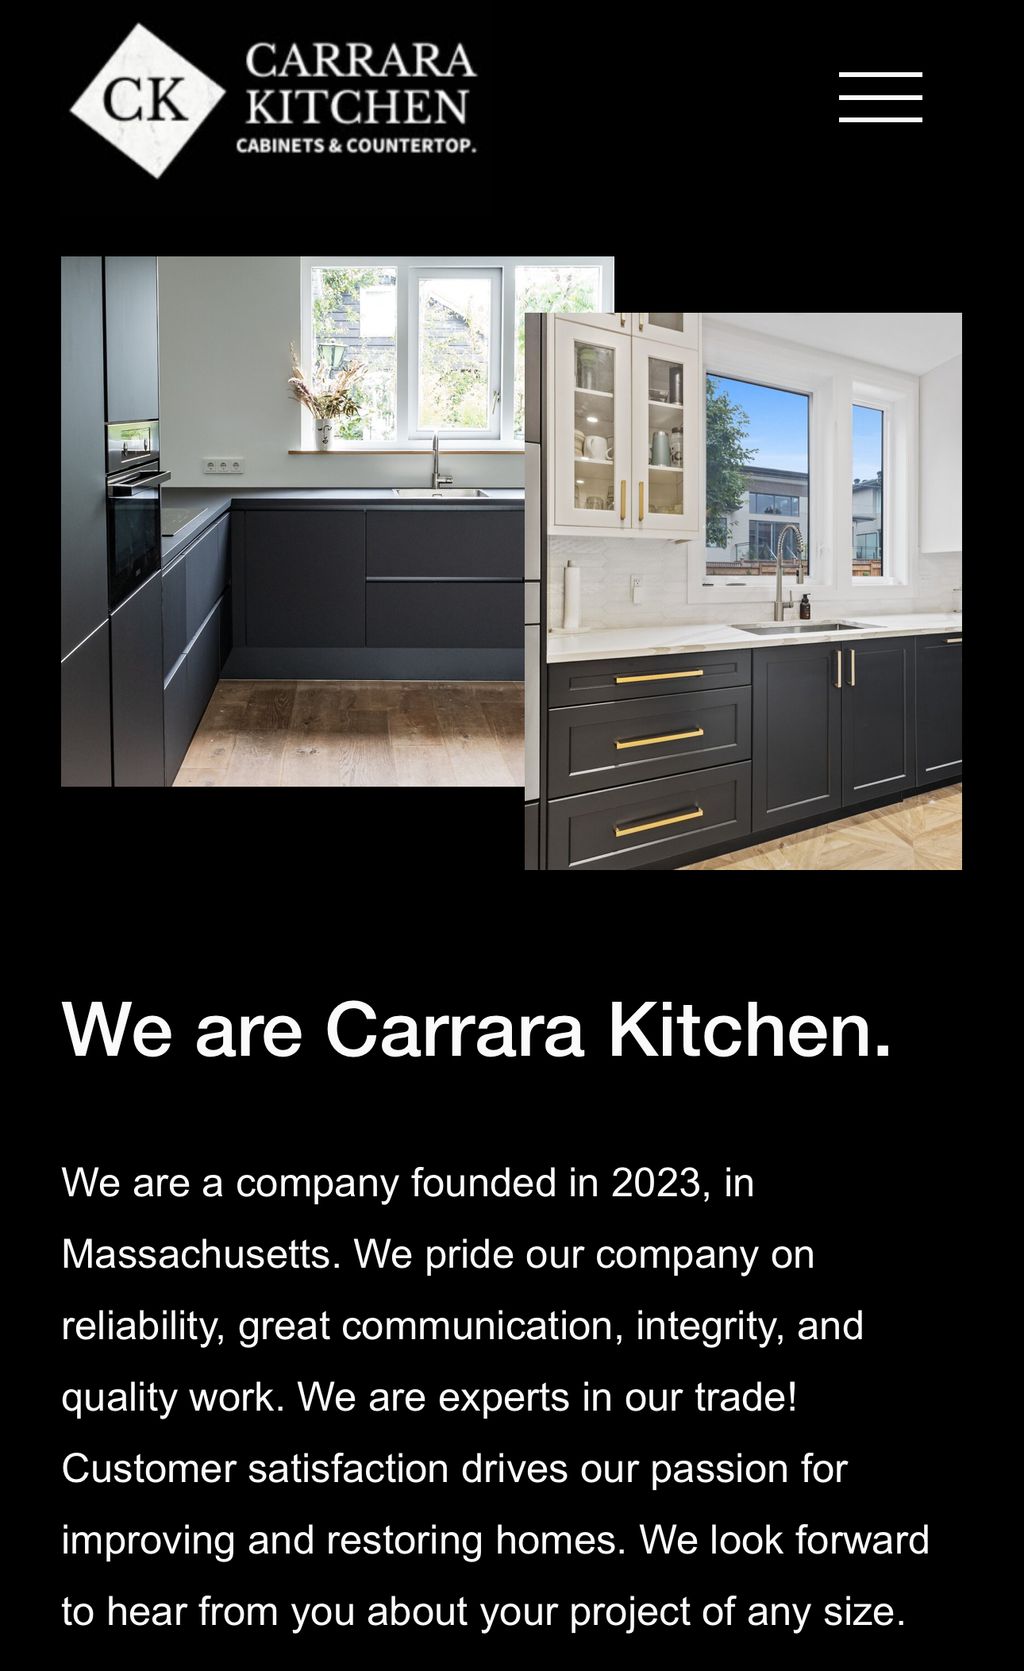 carrara kitchen cabinets & stones inc